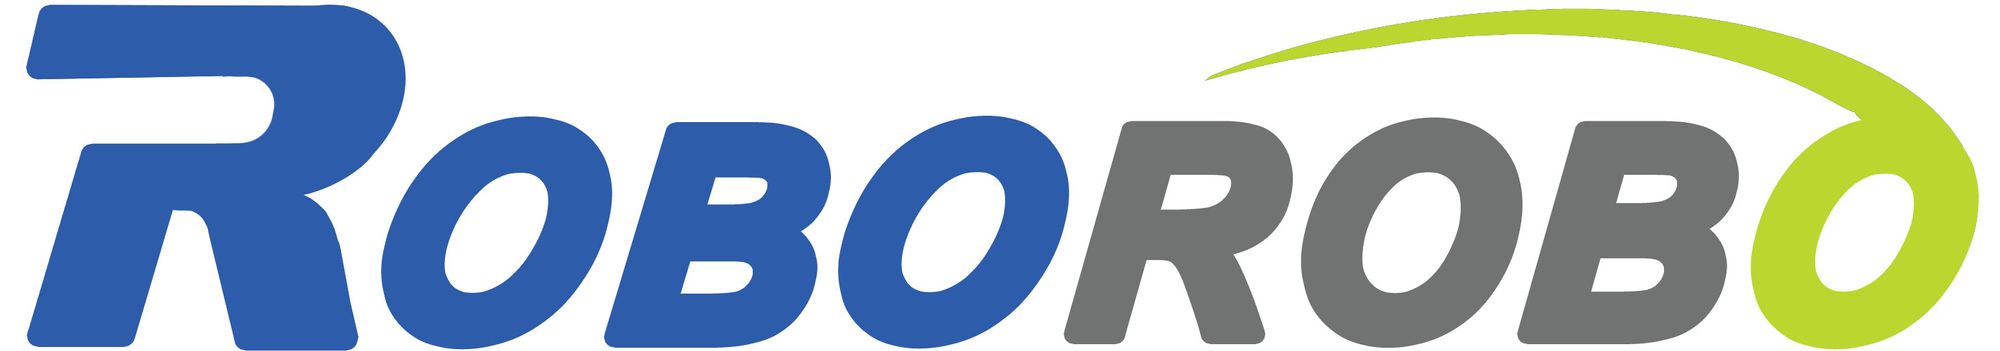 Roborobo